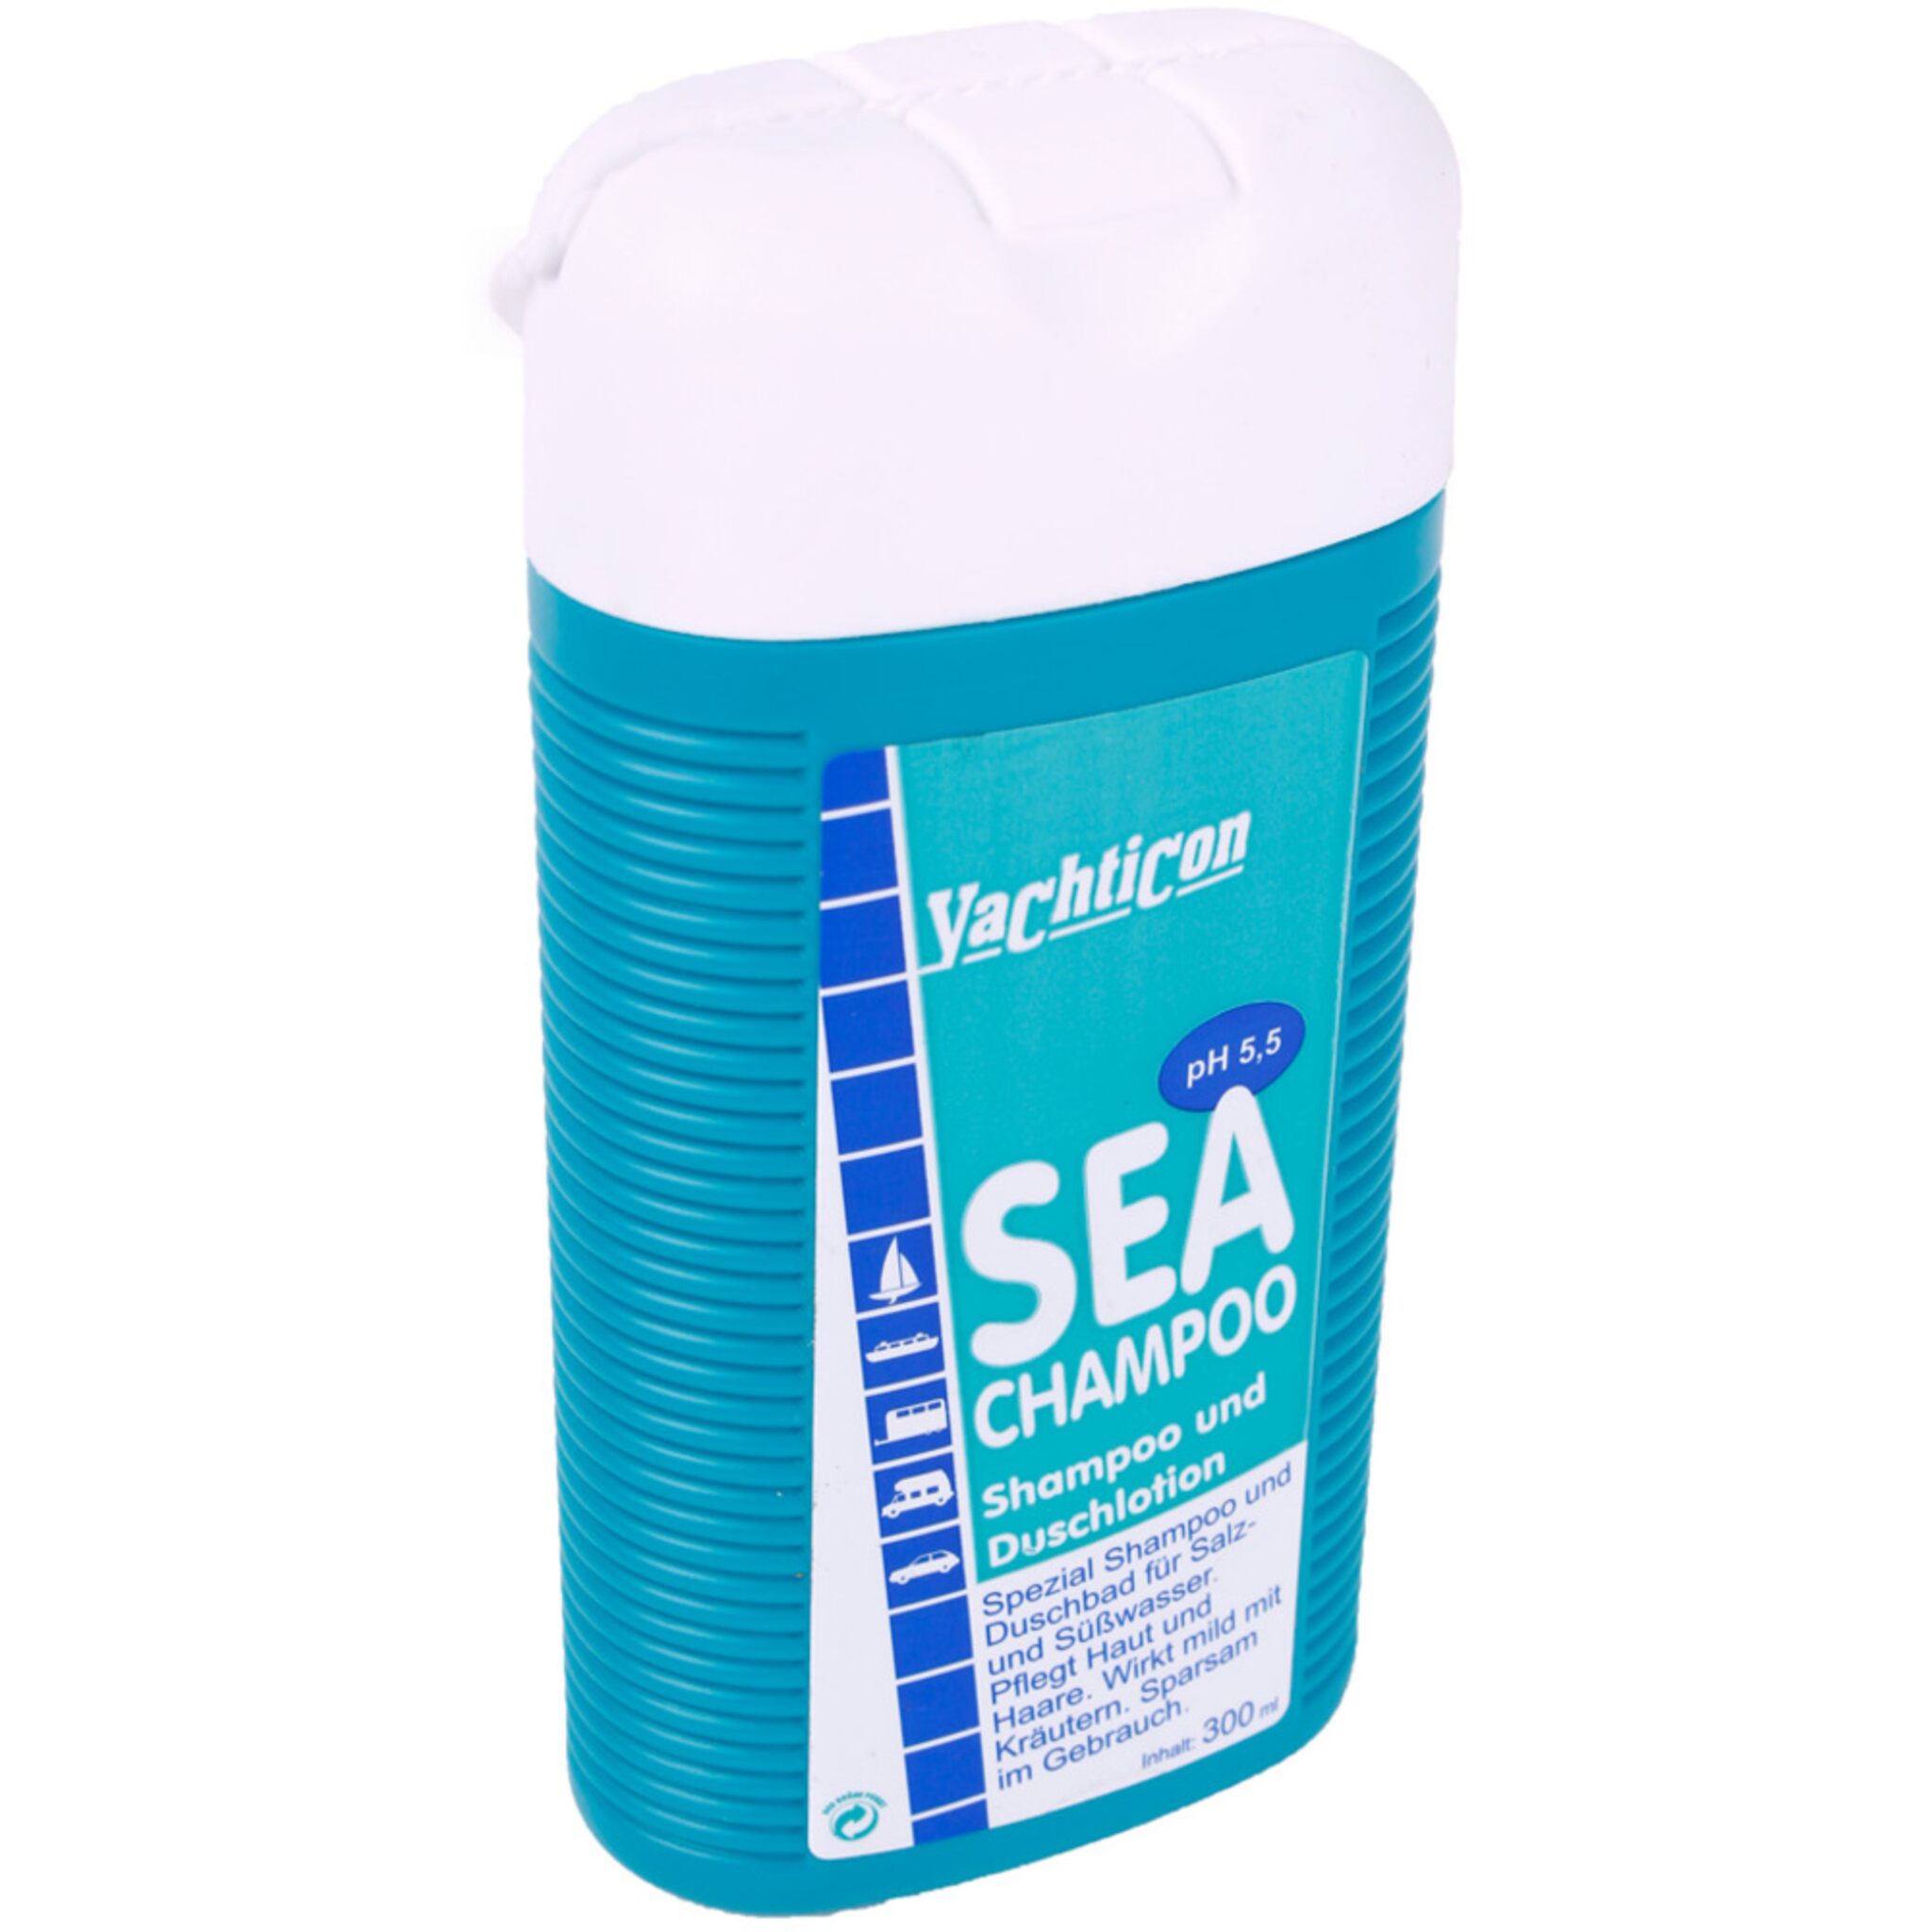 Yachticon SeaChampoo Shampoo und Duschlotion